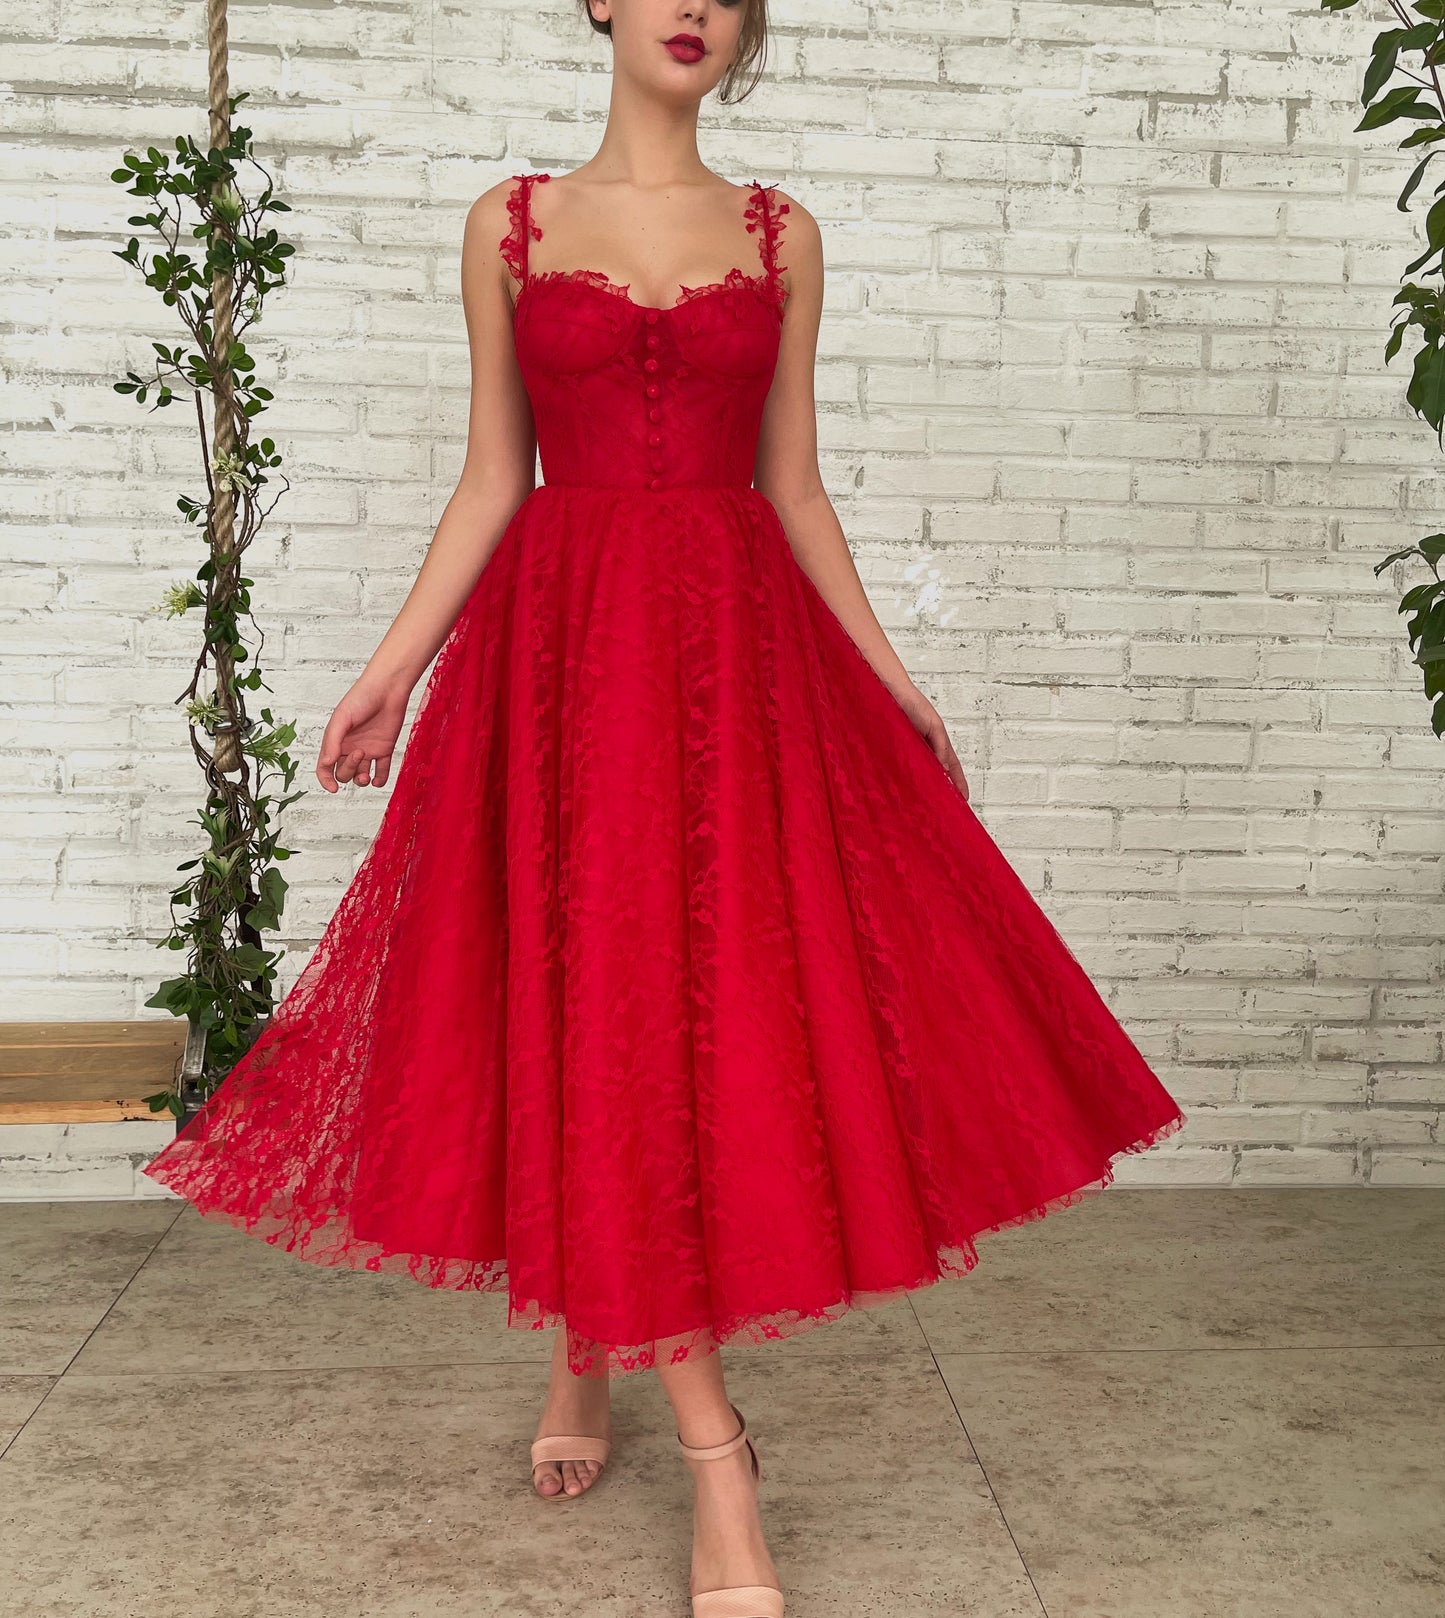 Red midi dress with spaghetti straps